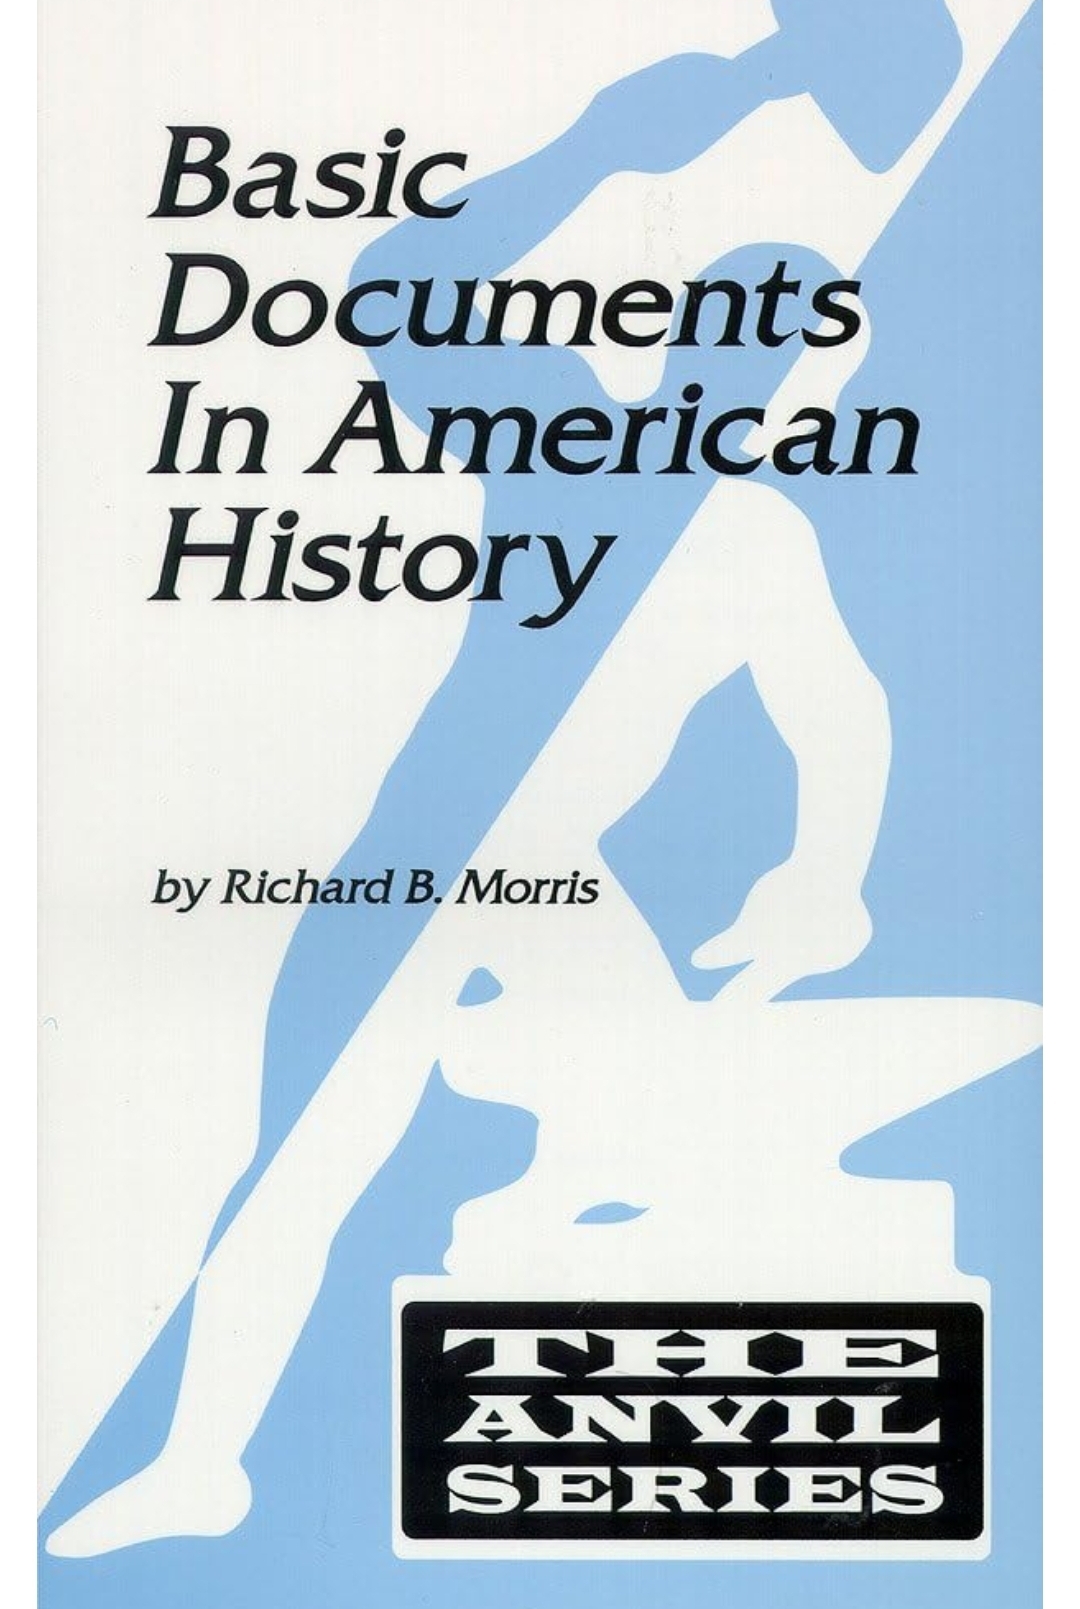 Basic Documents in American History by Richard B. Morris